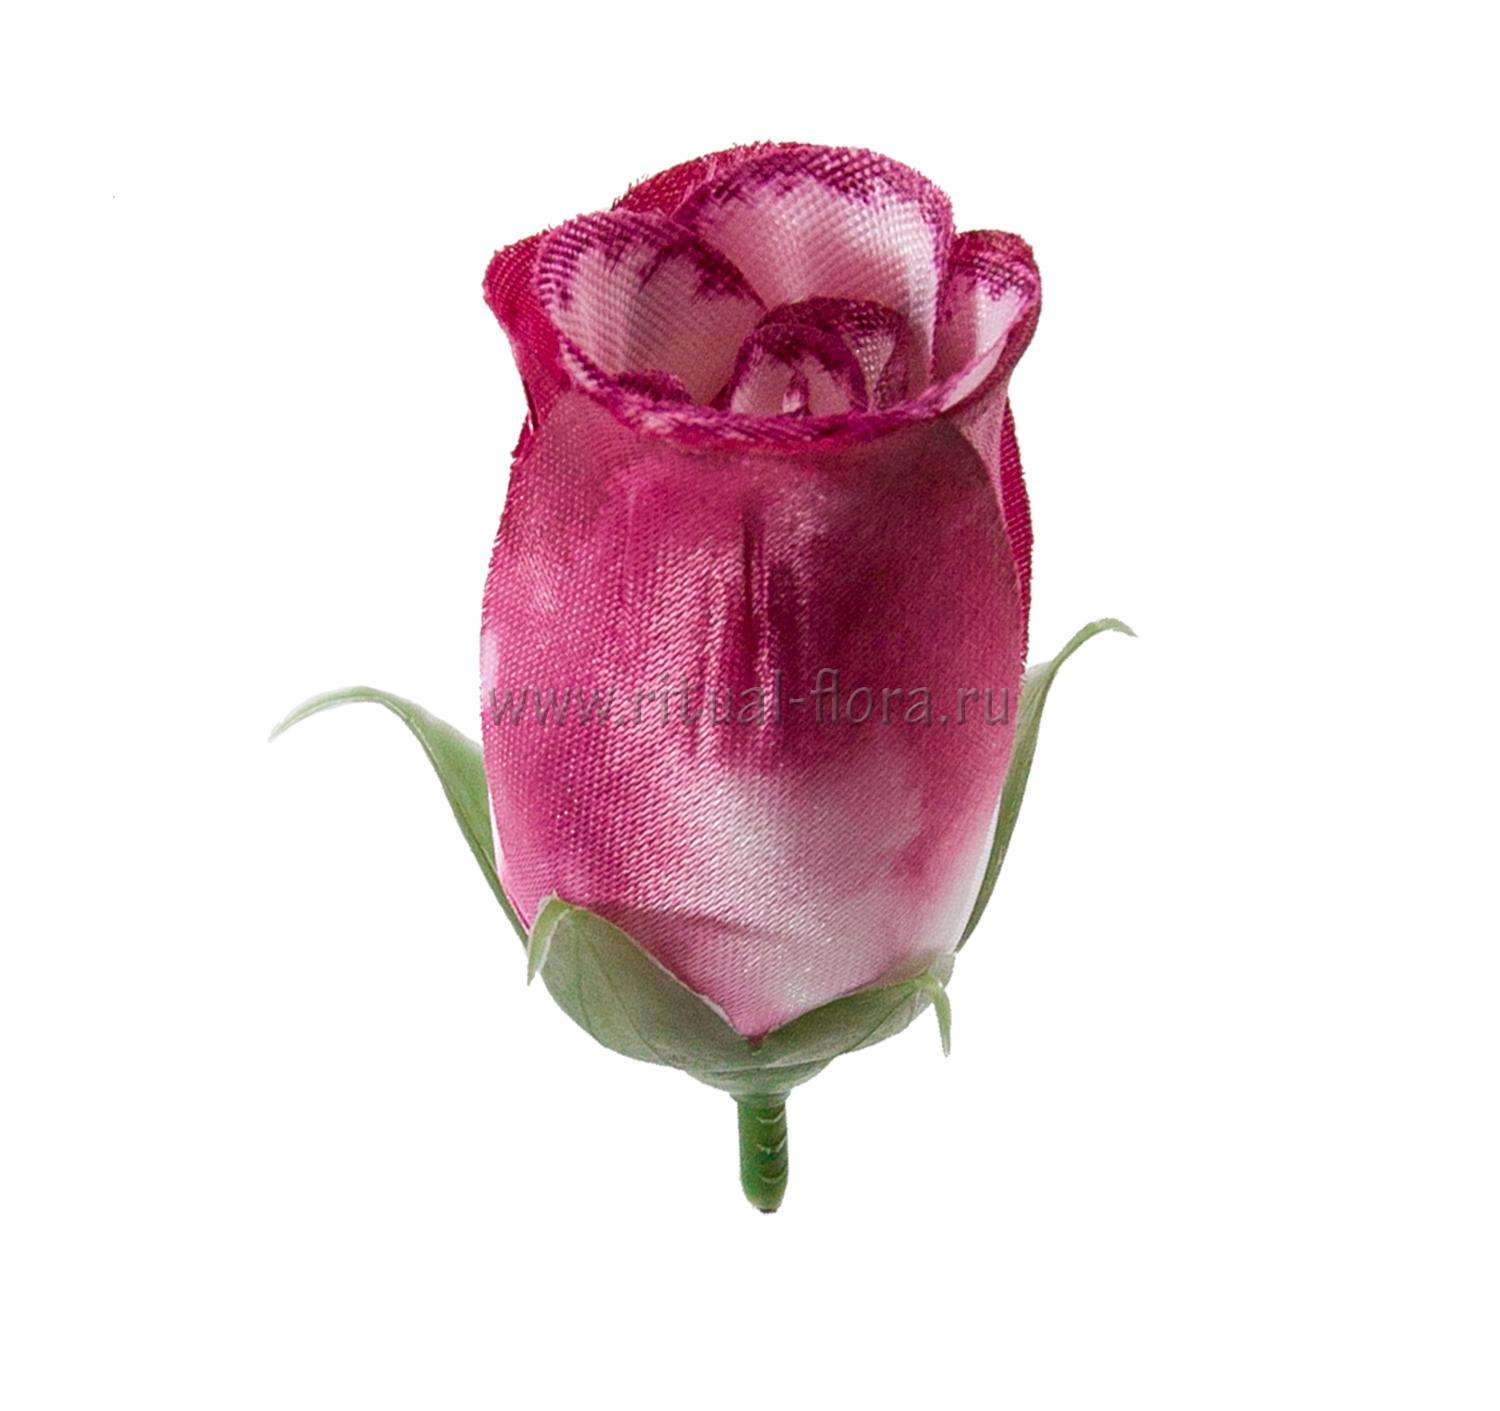 roza-buton-akvarel-1-100-bordovyy